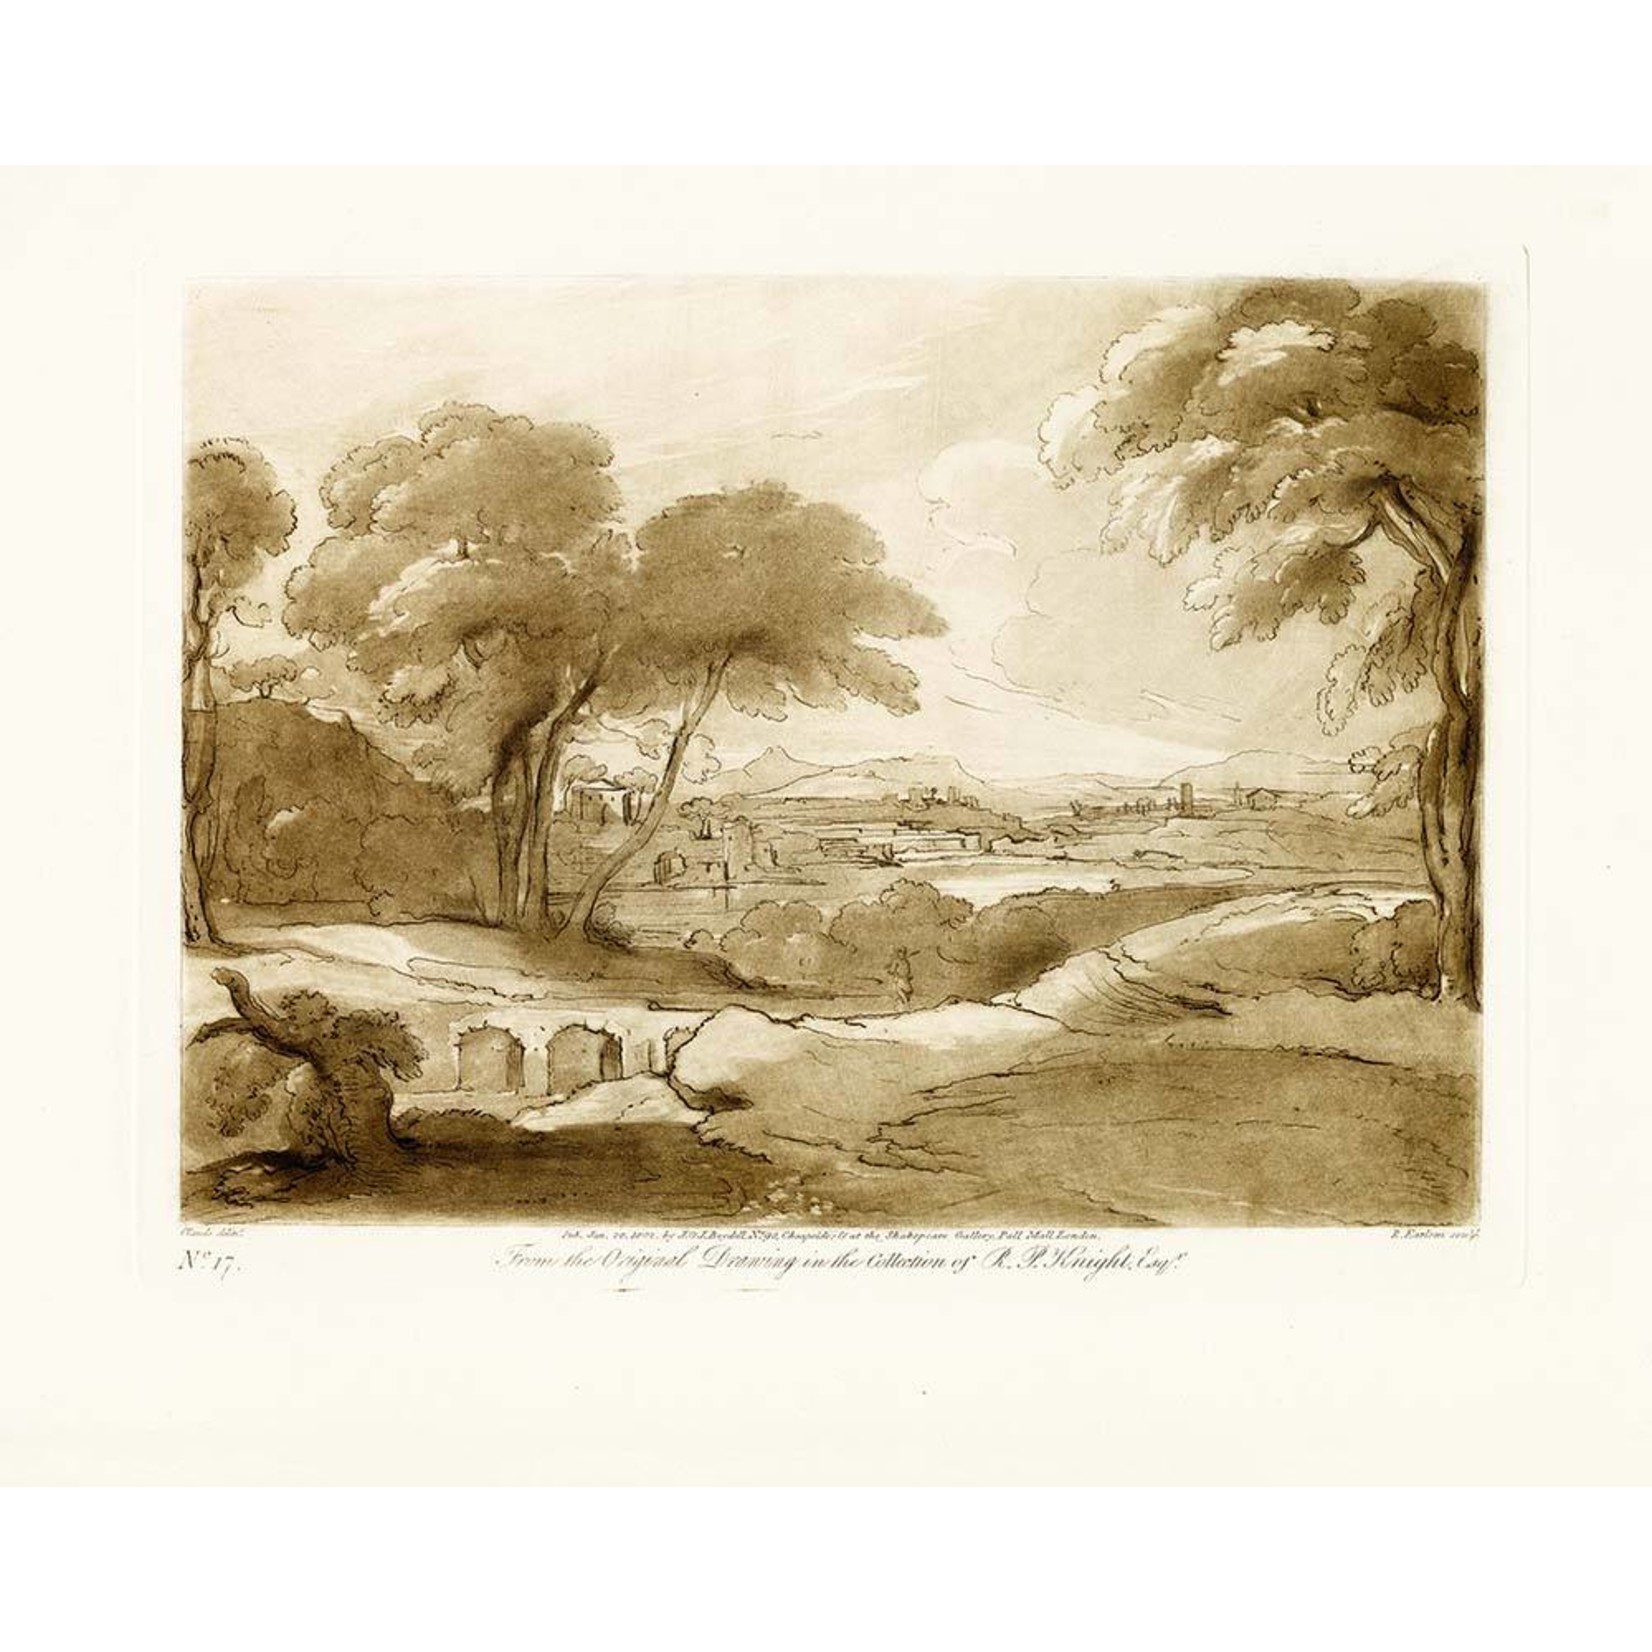 Framed Print on Rag Paper: Antique Pastoral Scene by J. Boydell 1802 Cheapside at the Shakspeare